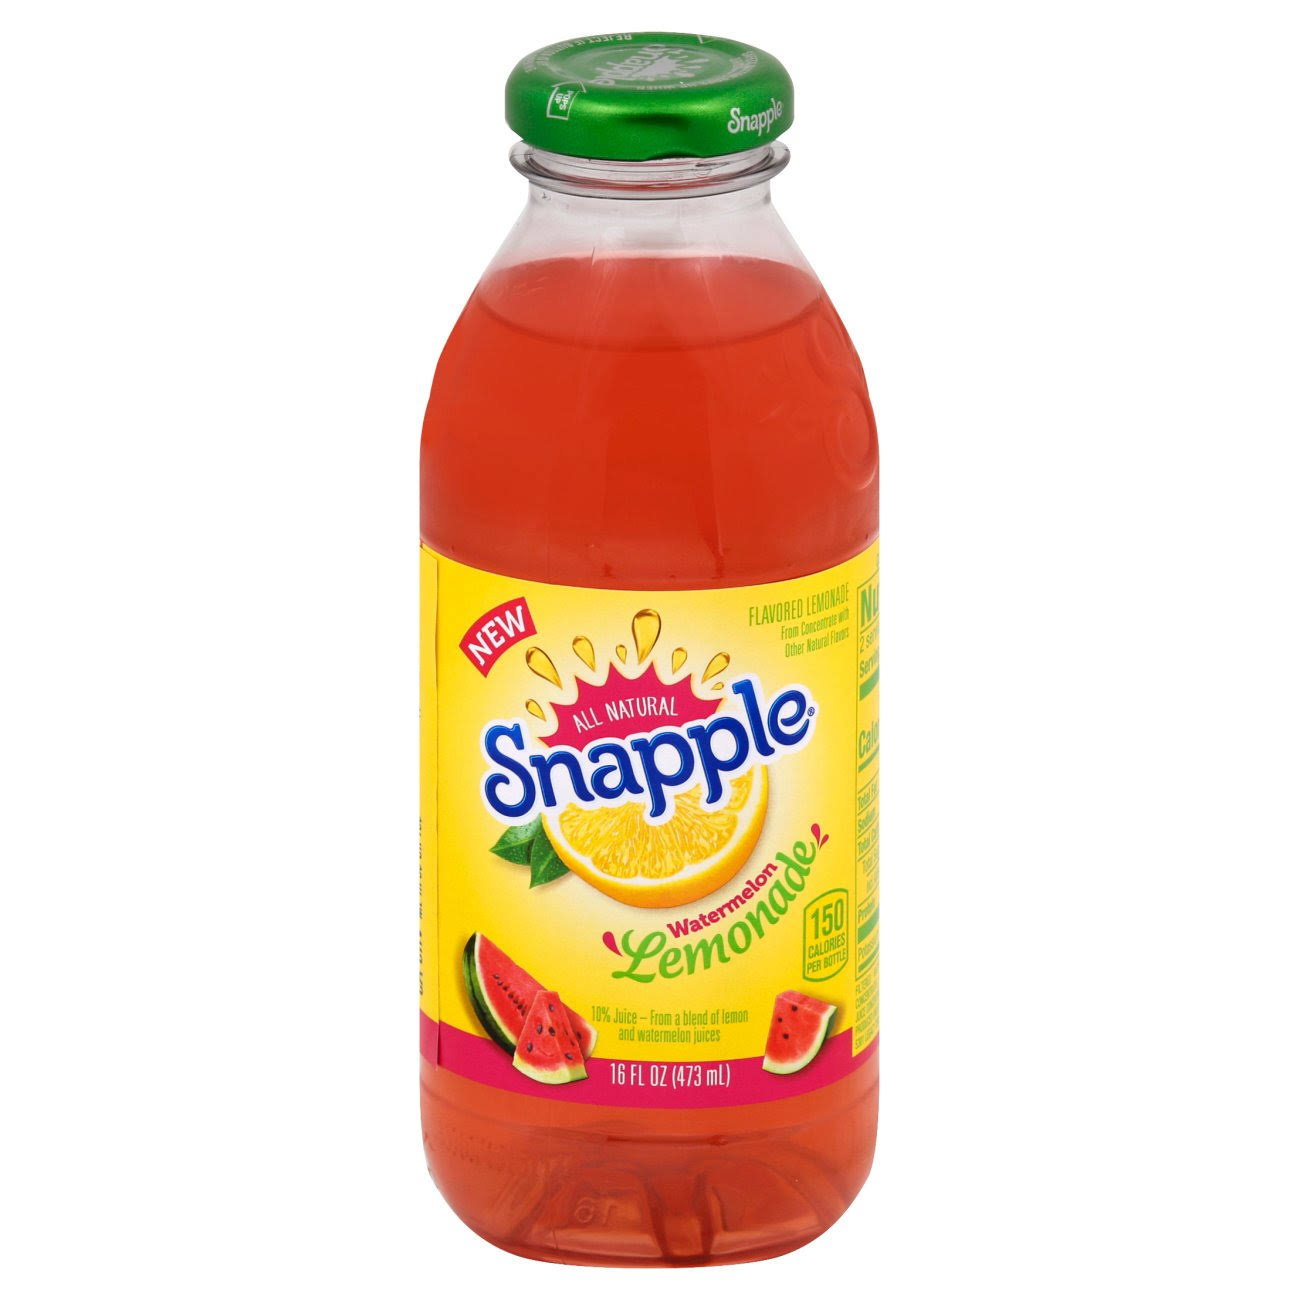 Snapple Watermelon Lemonade - 16fl.oz (473ml)